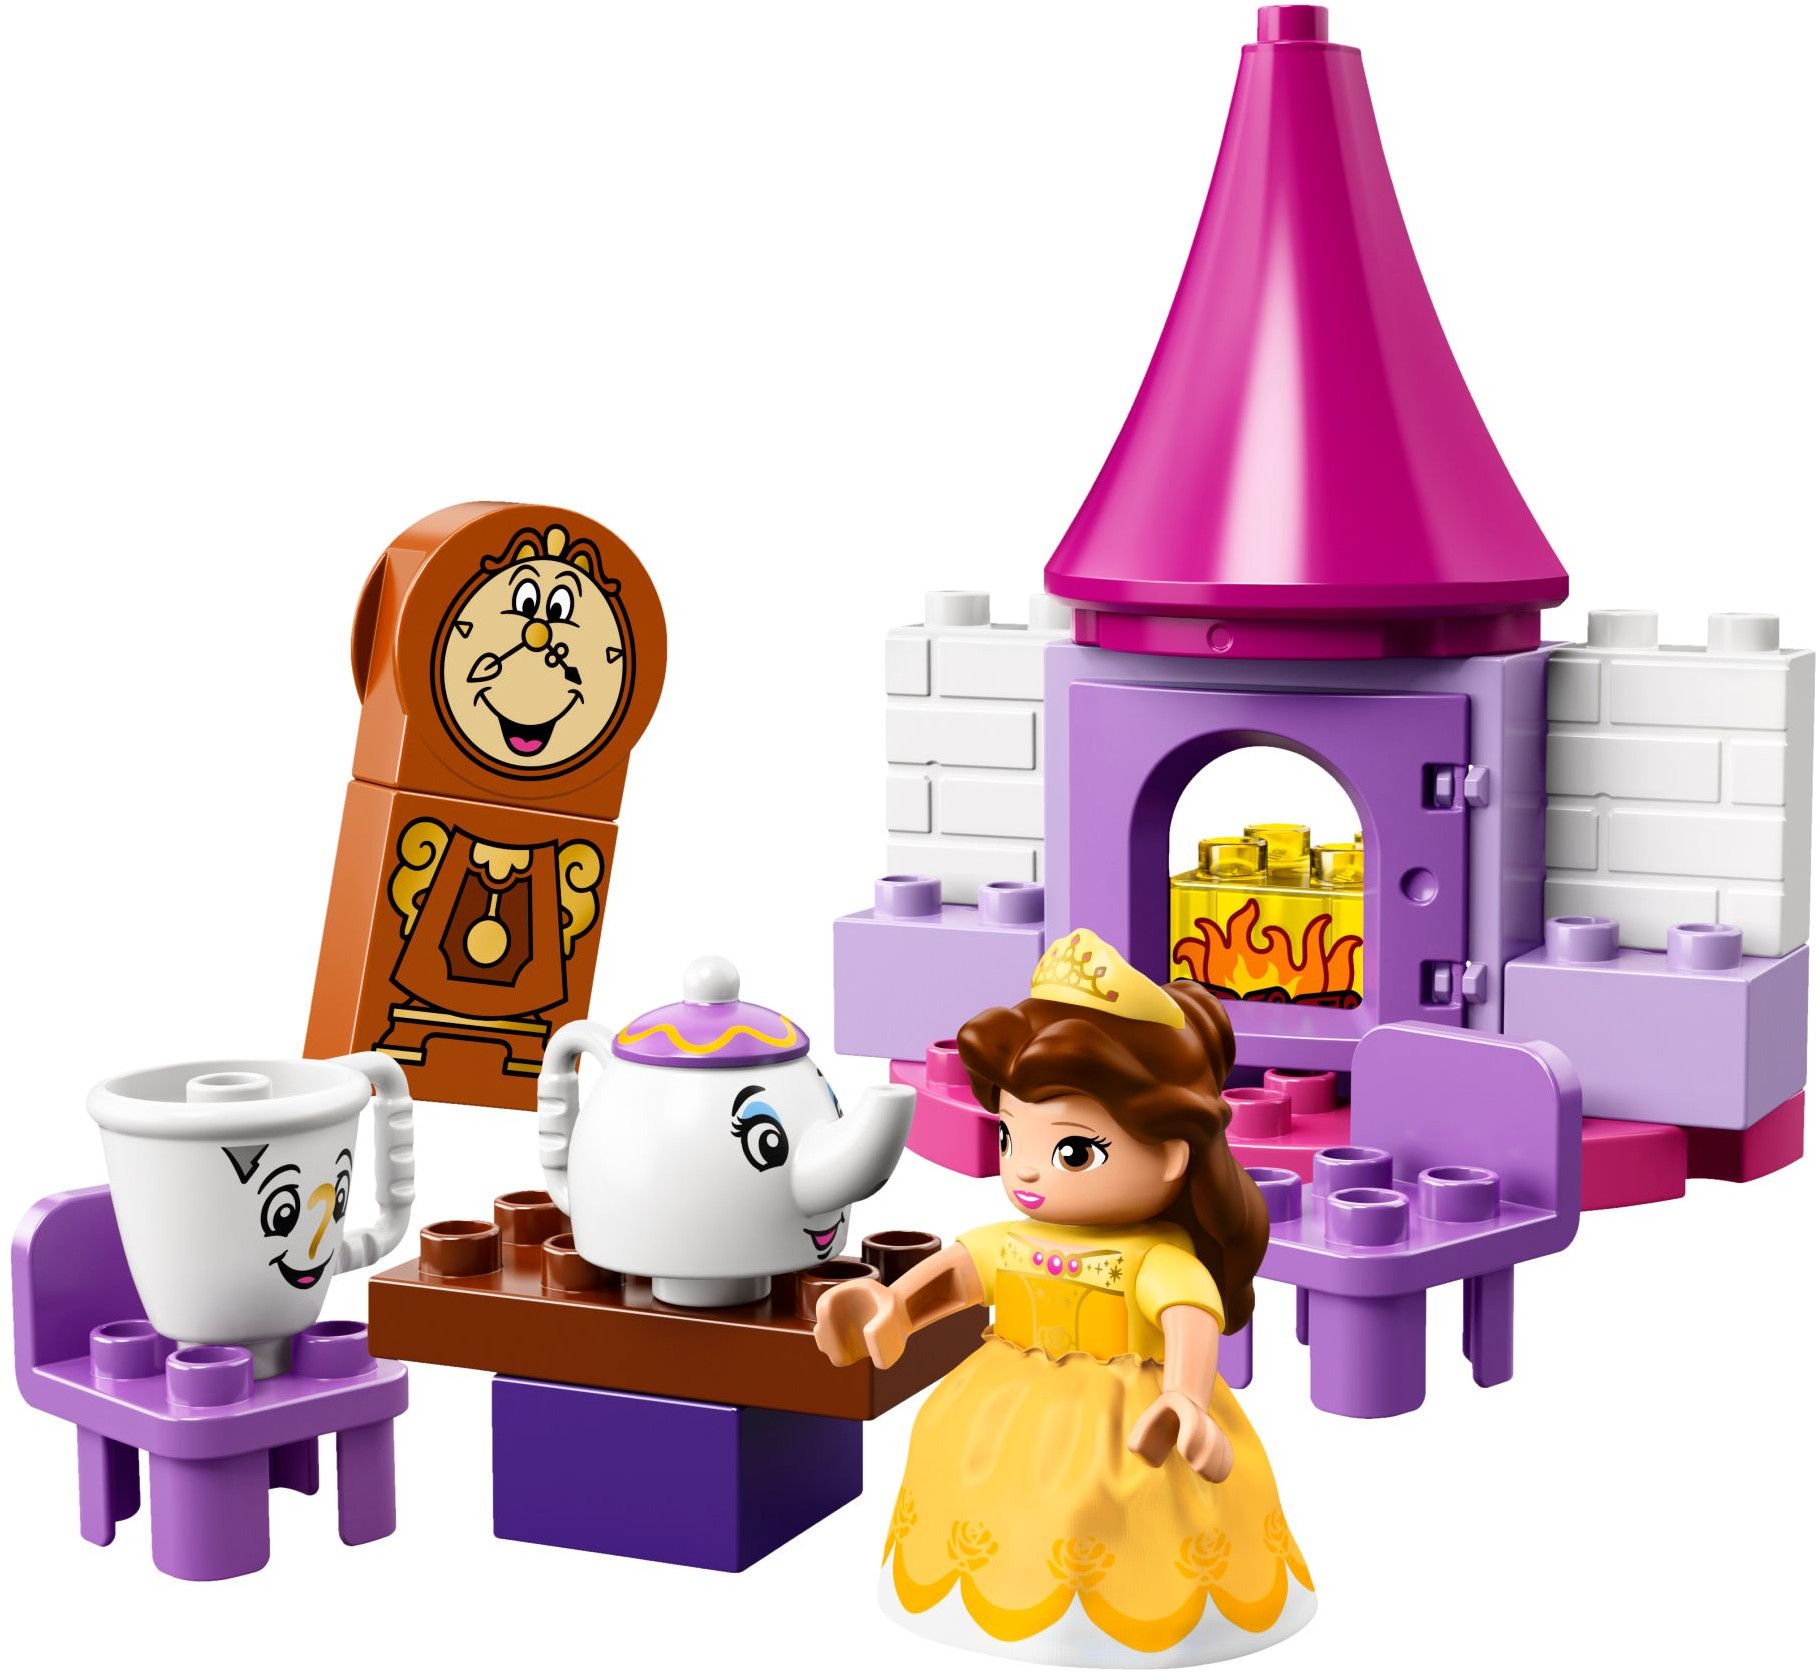 Snow White Prince Charming Disney Princess Castle Lego DUPLO Girls Pink Purple 